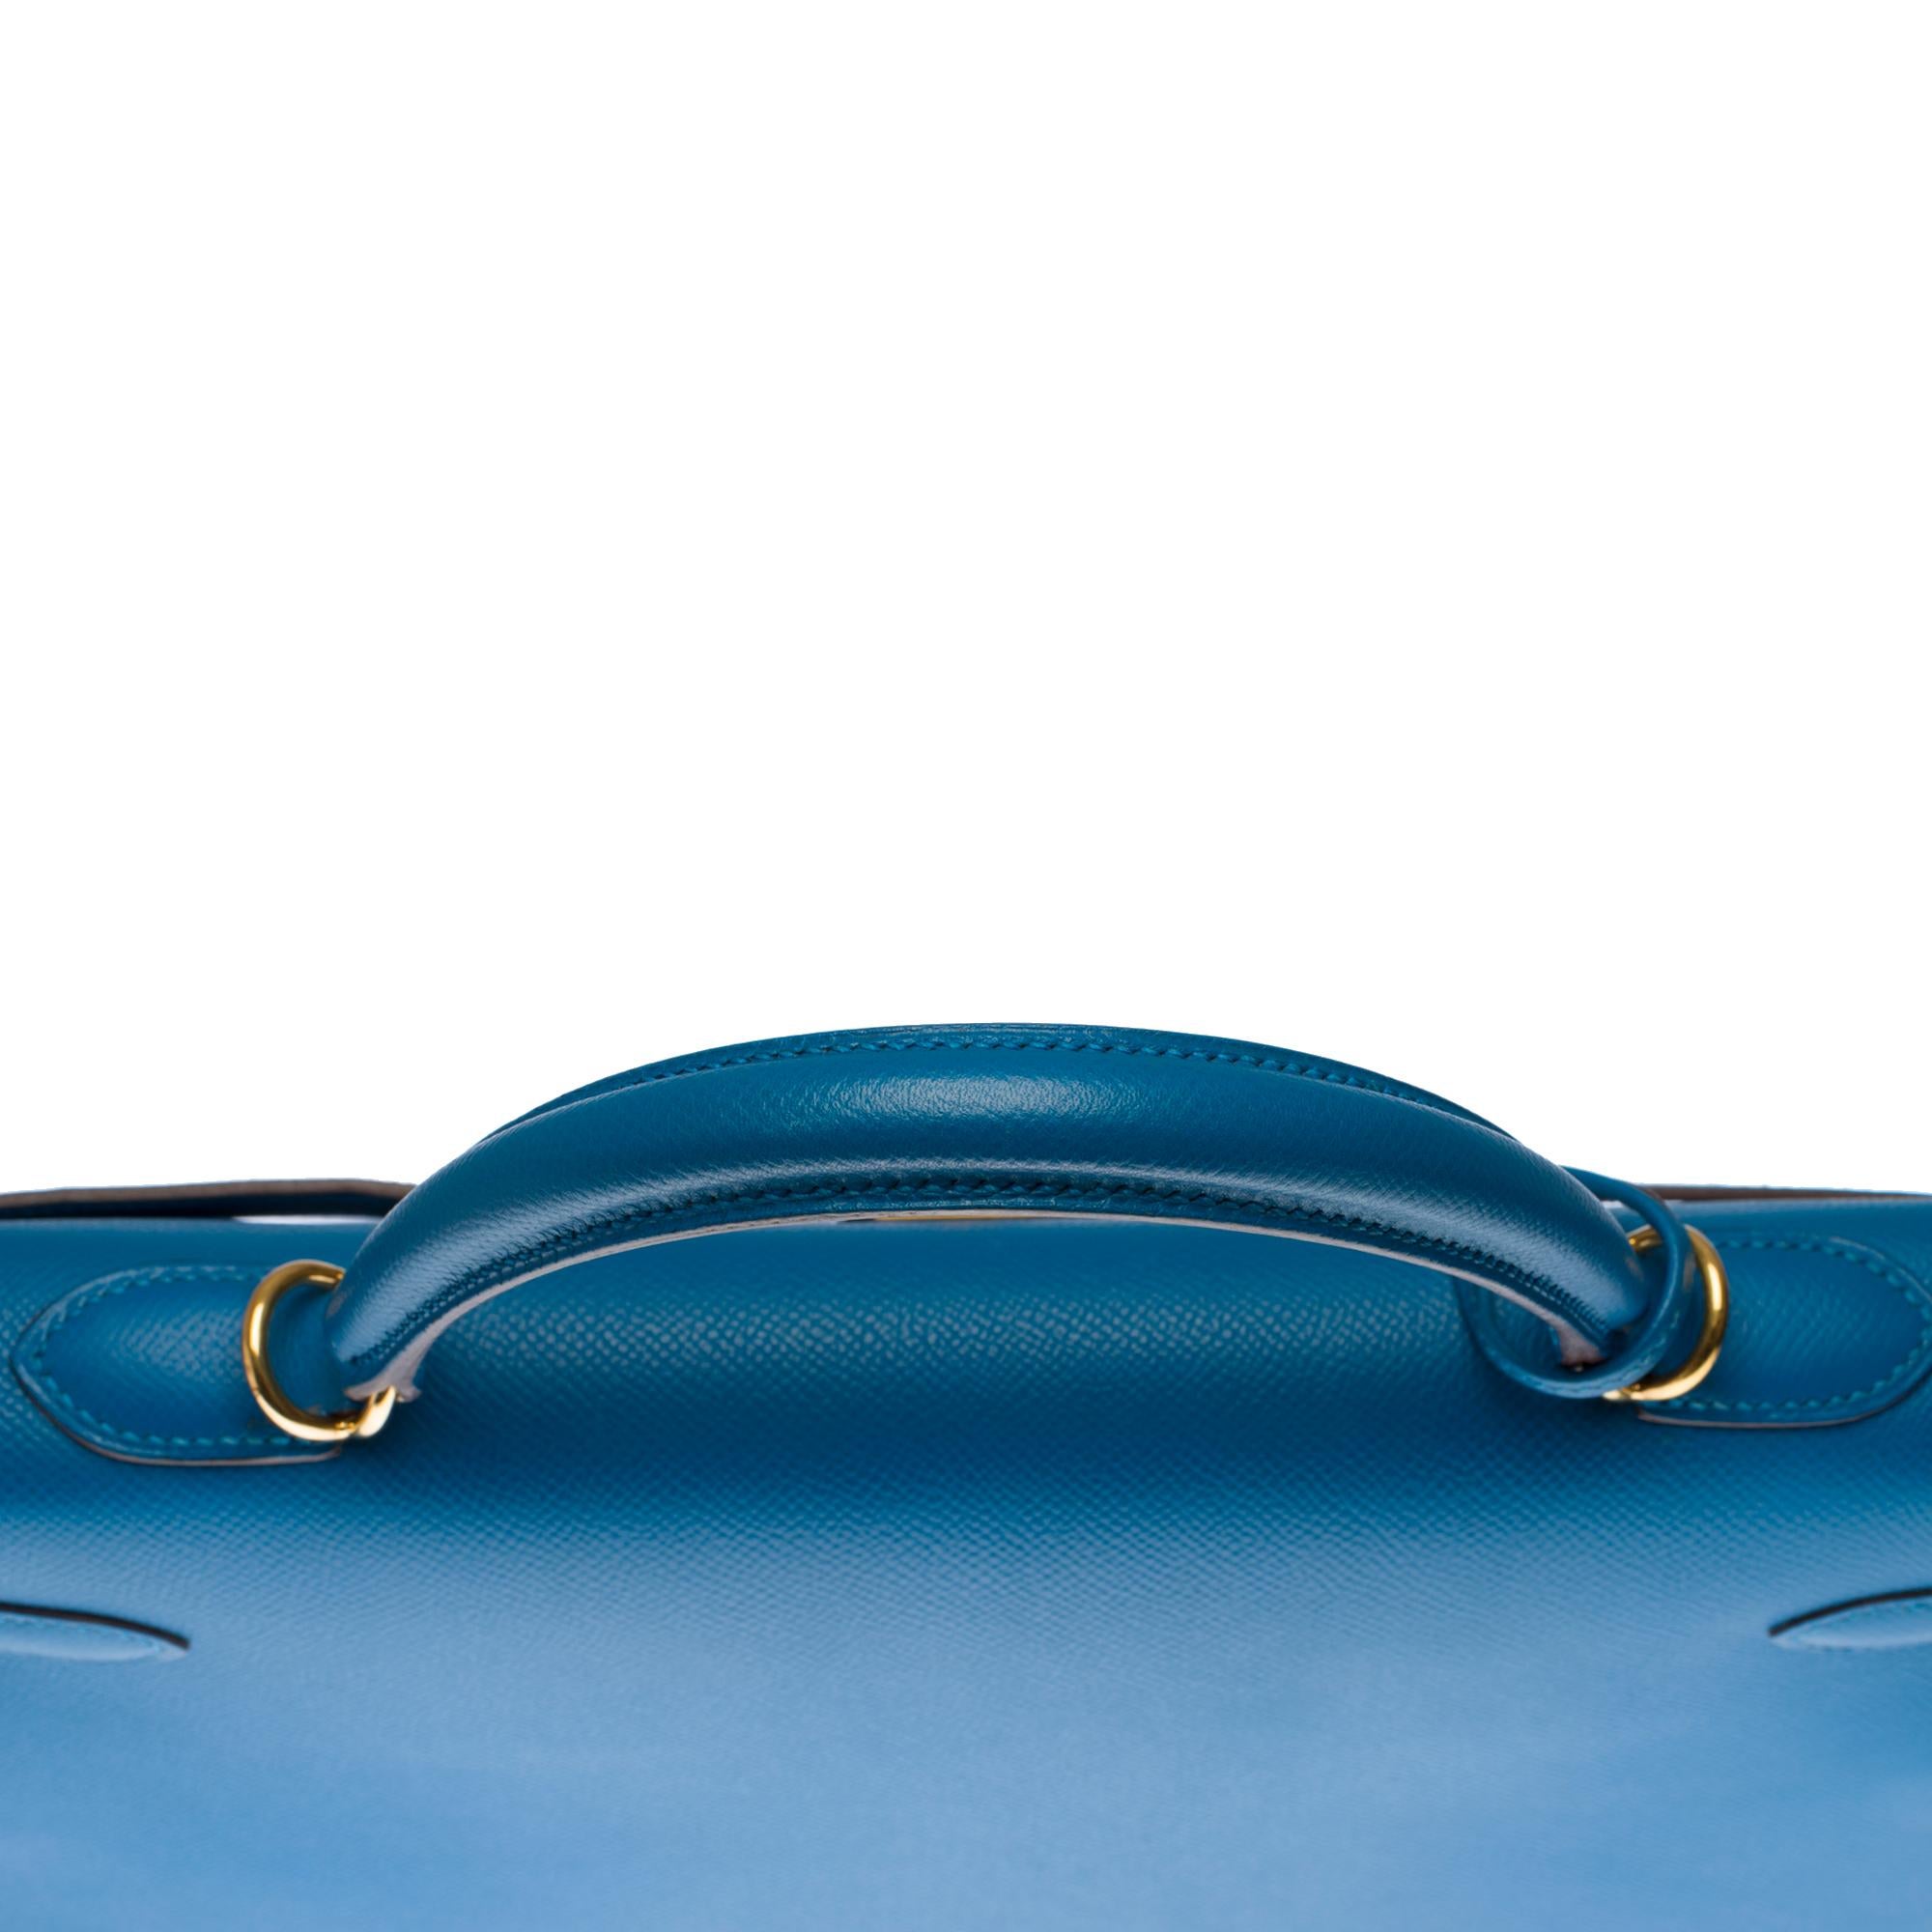 Stunning Hermès Kelly 35 sellier strap in Blue Mykonos Epsom leather, GHW 1